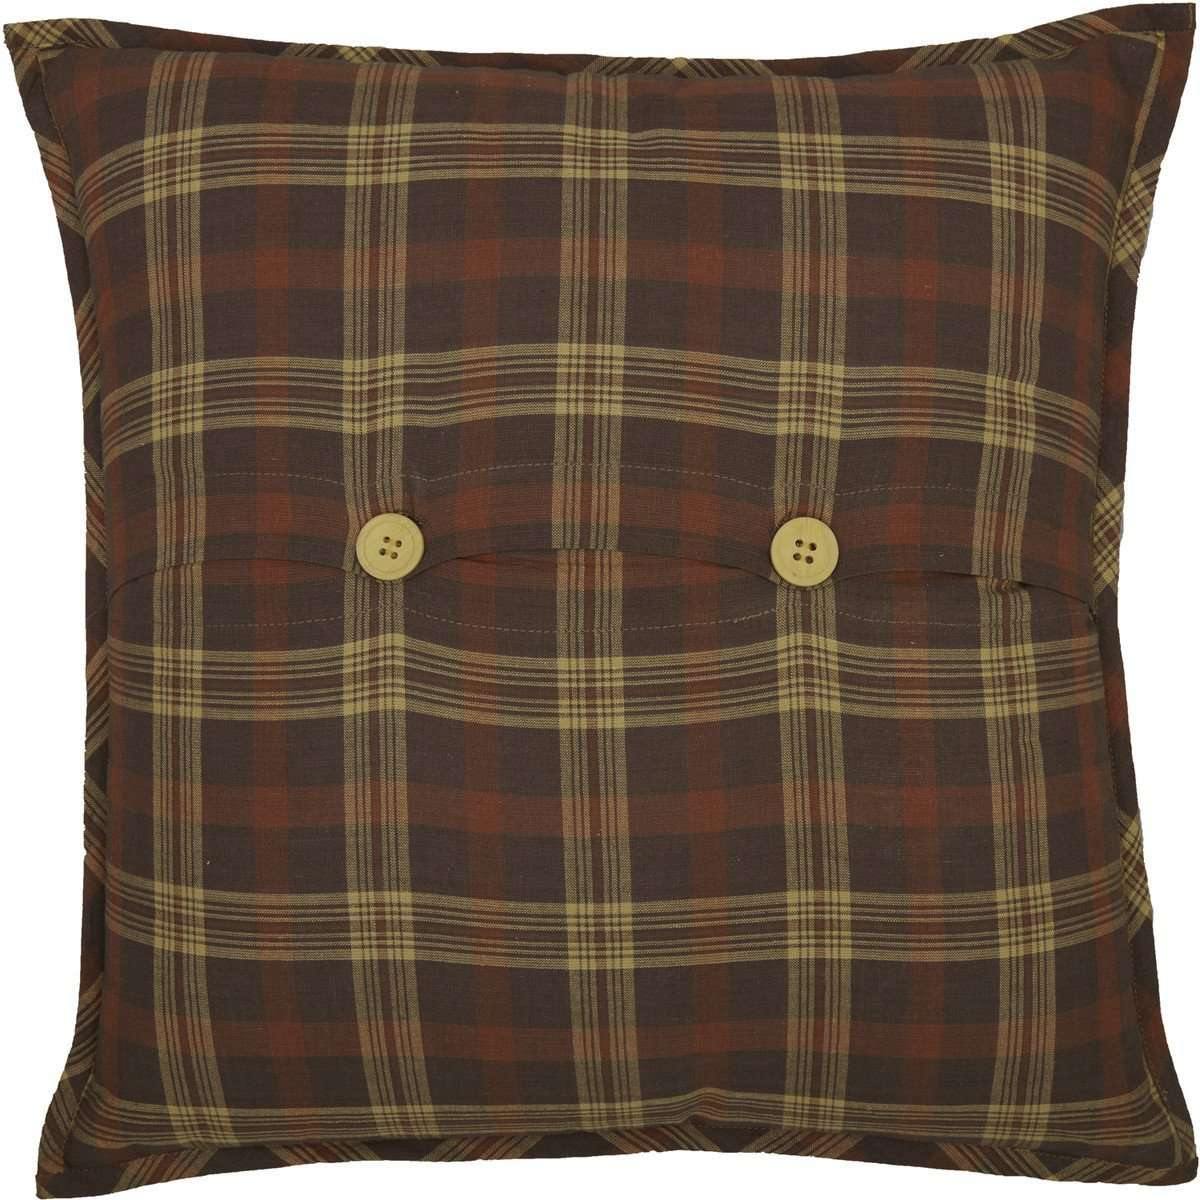 Abilene Harvest Wreath Pillow 18x18 VHC Brands - The Fox Decor